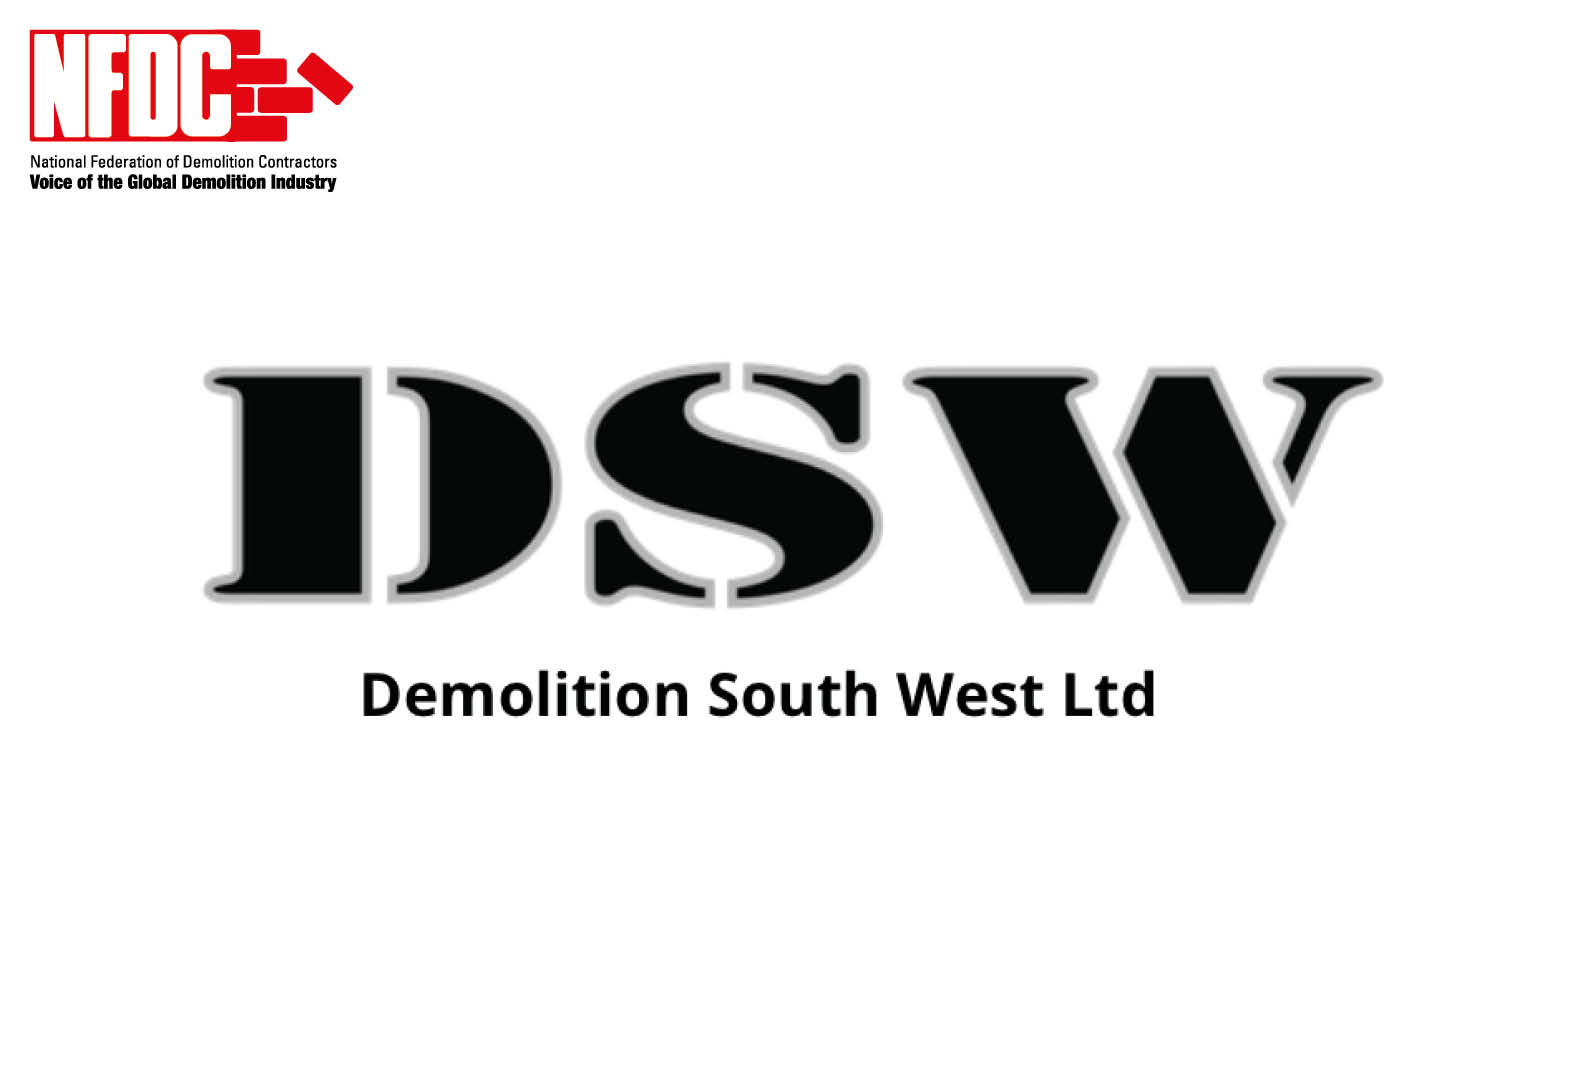 Demolition South West Ltd